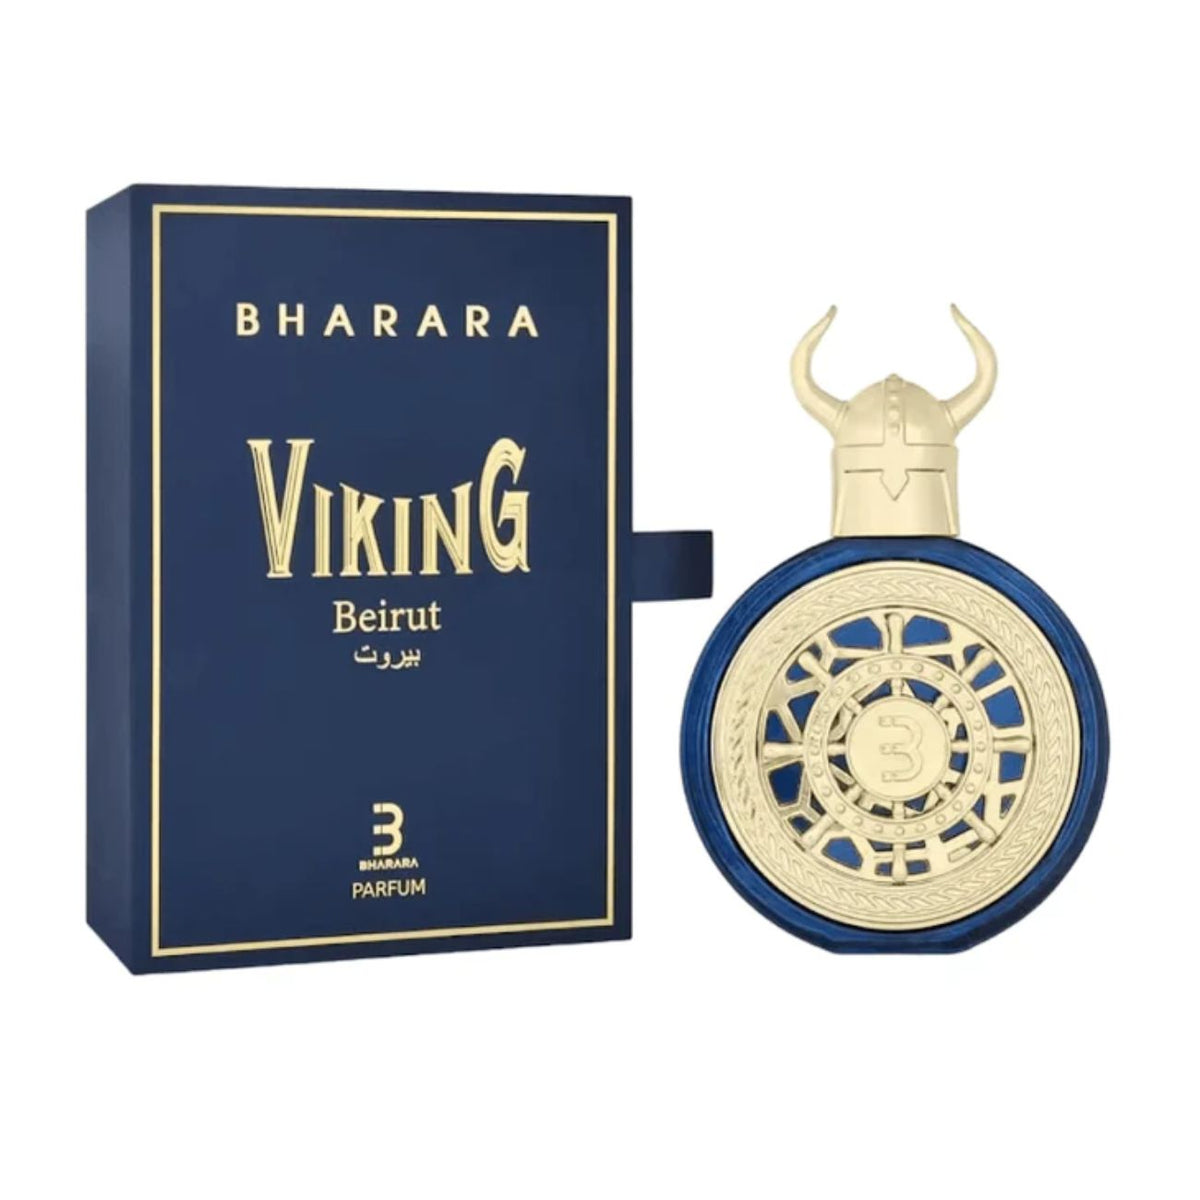 Perfume de hombre Bharara Viking Beirut Eau de Parfum 100ml